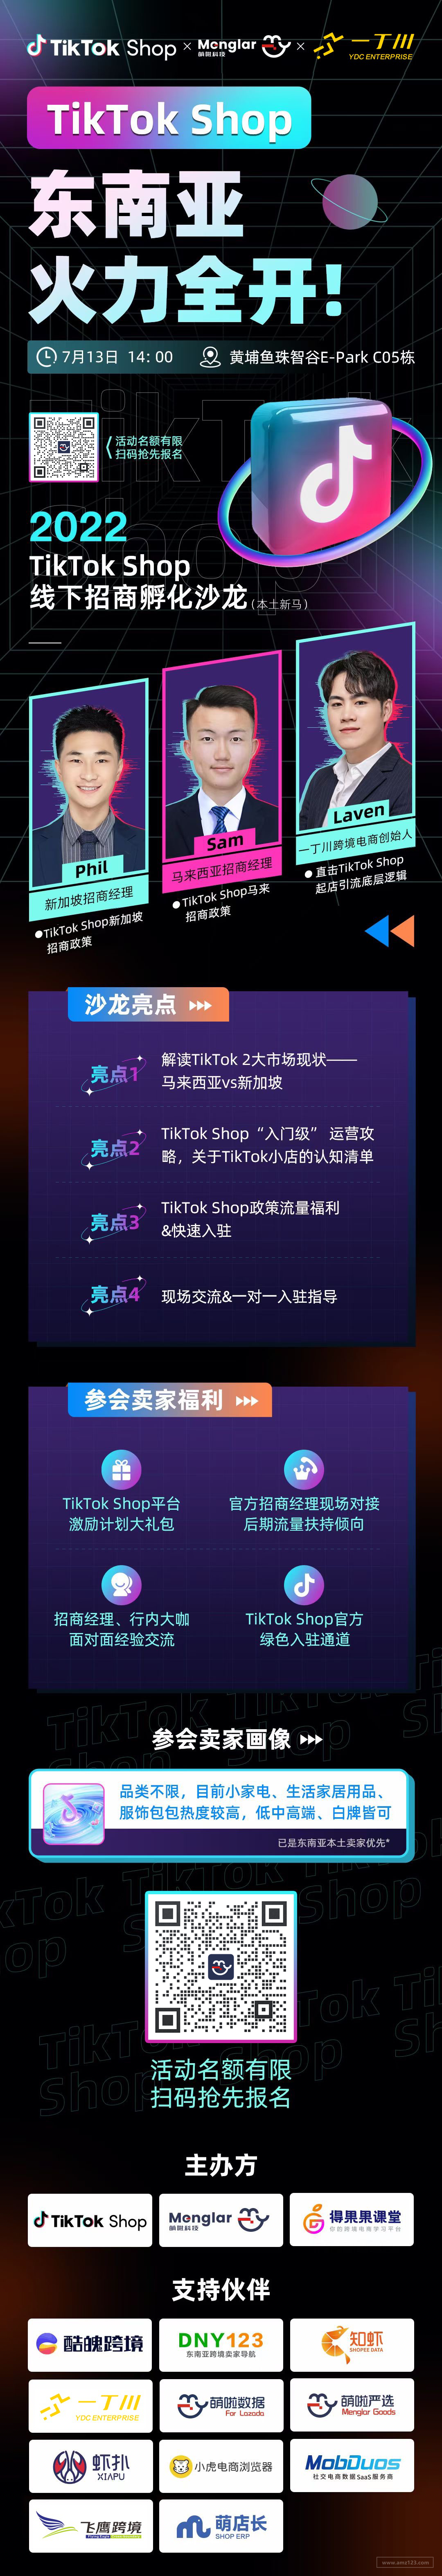 TikTok Shop7月13号线下招商沙龙